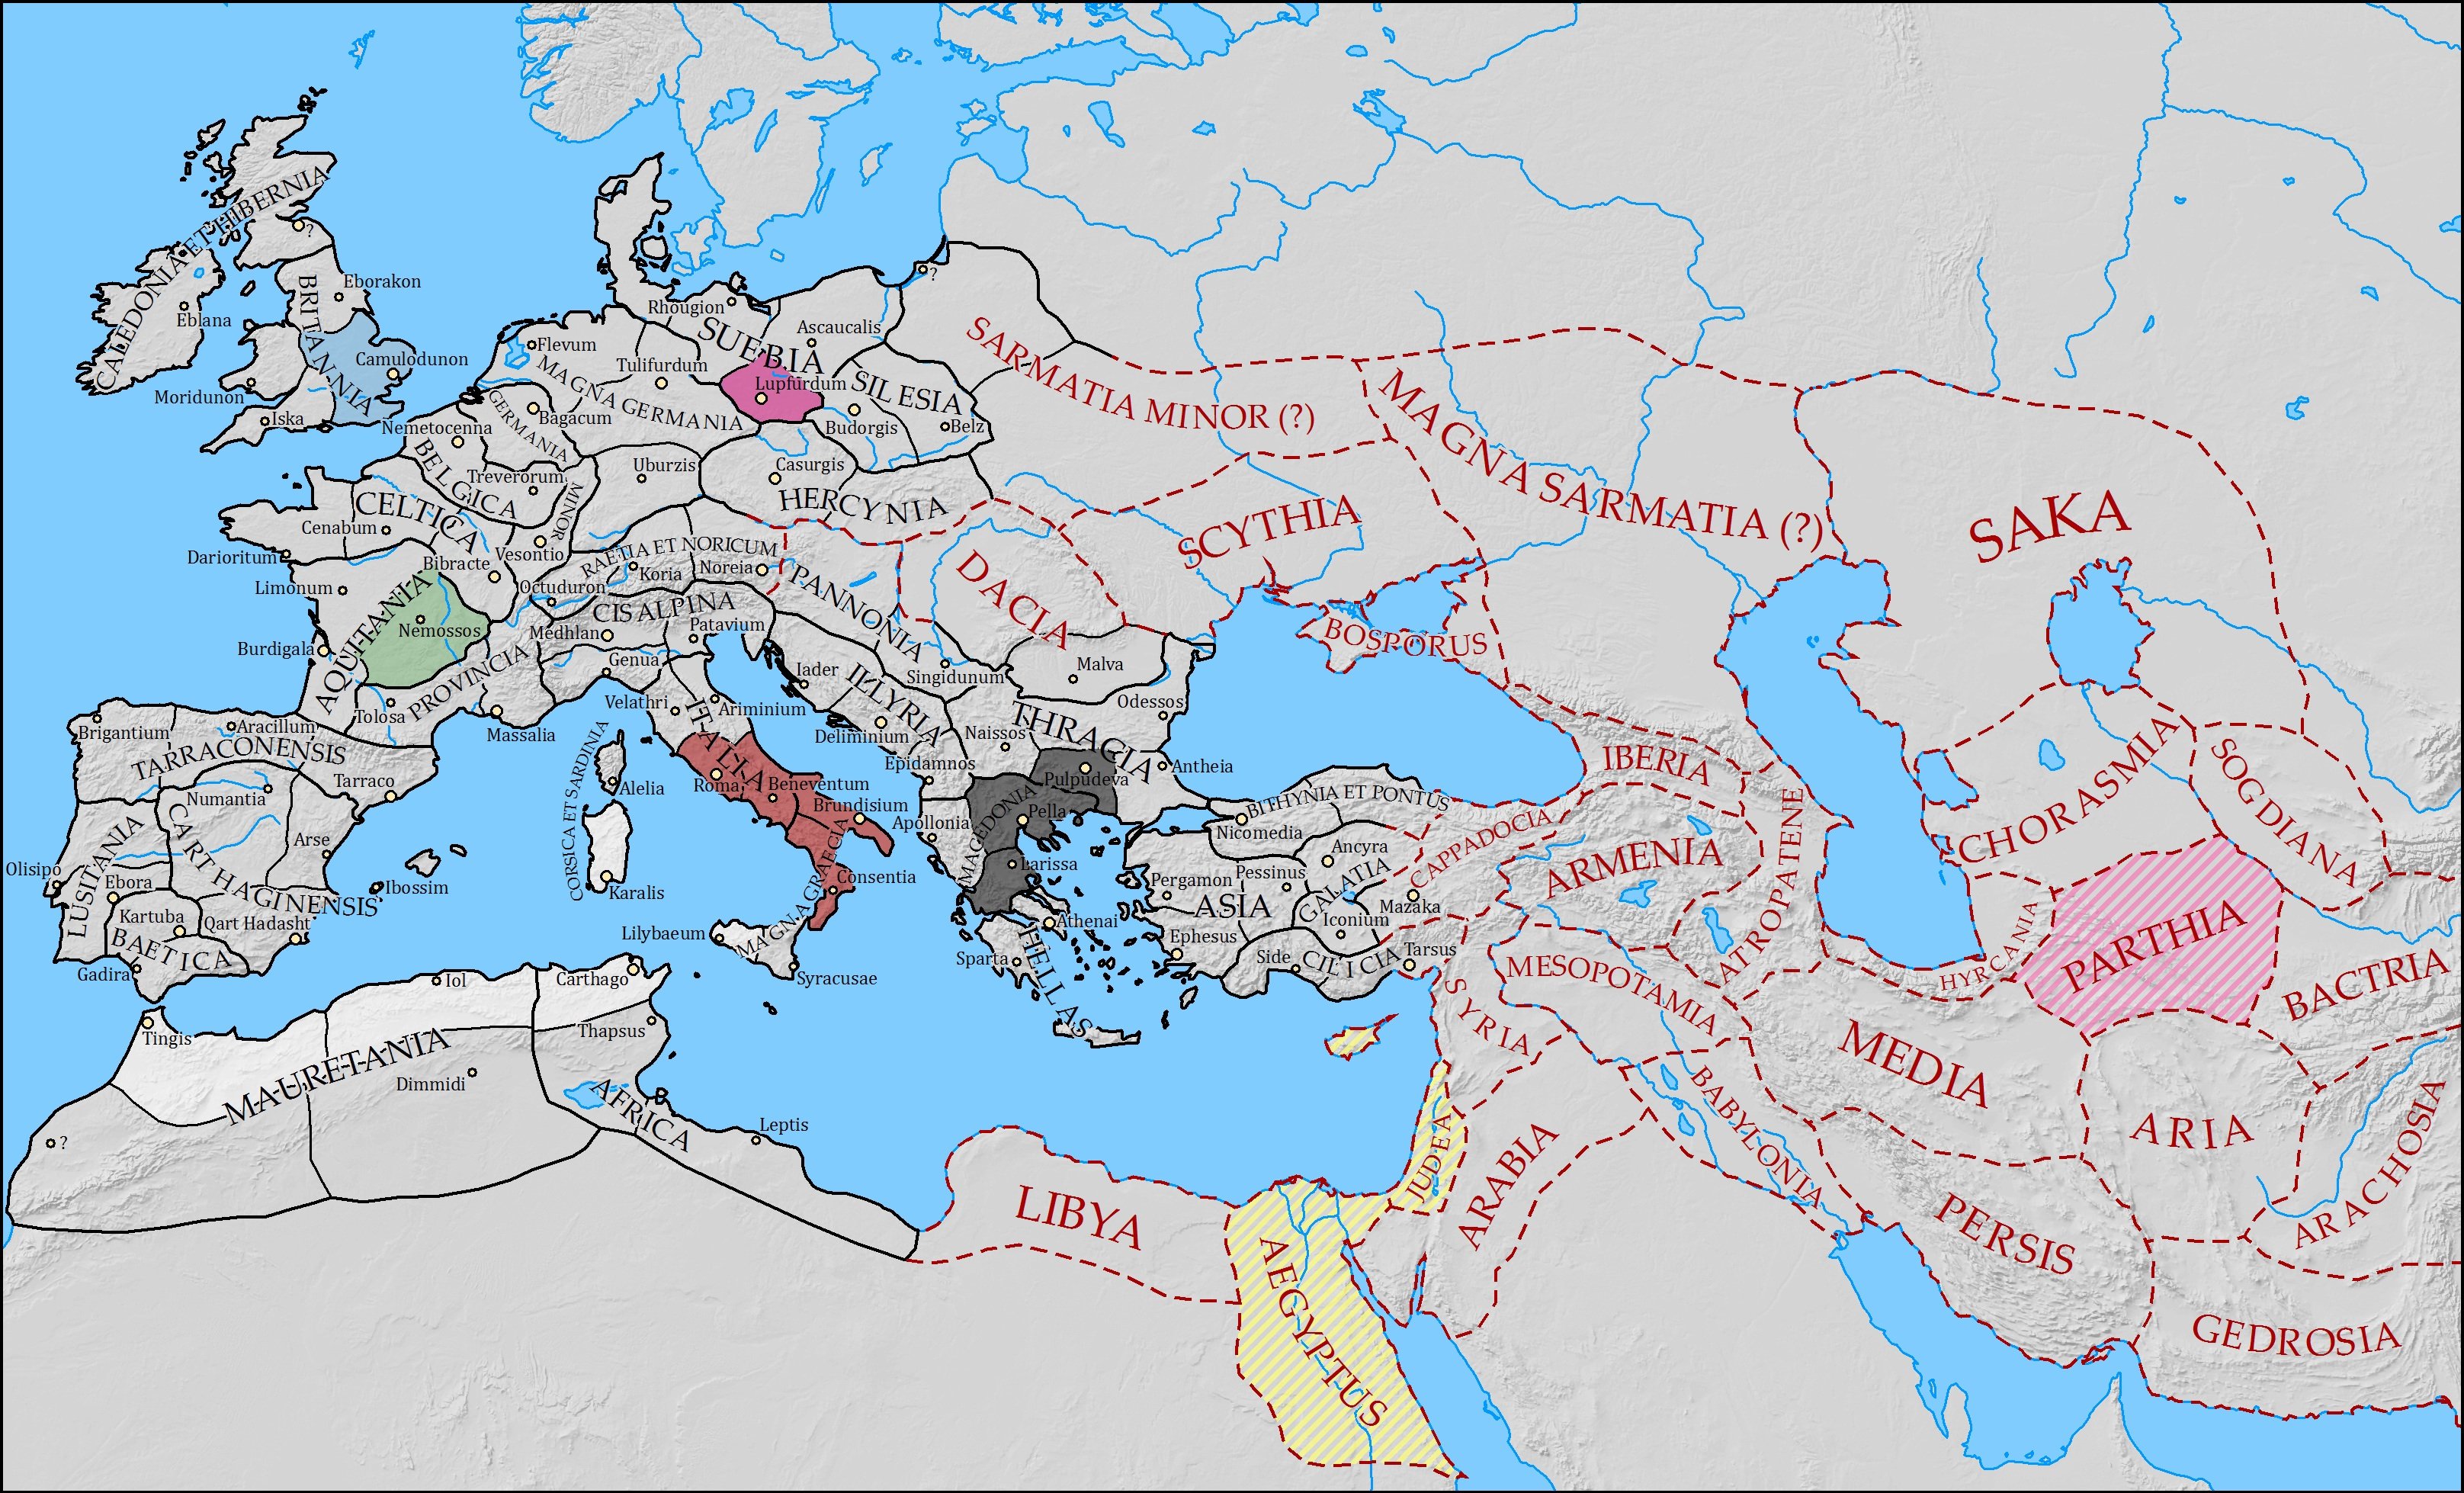 rome total war 2 maps